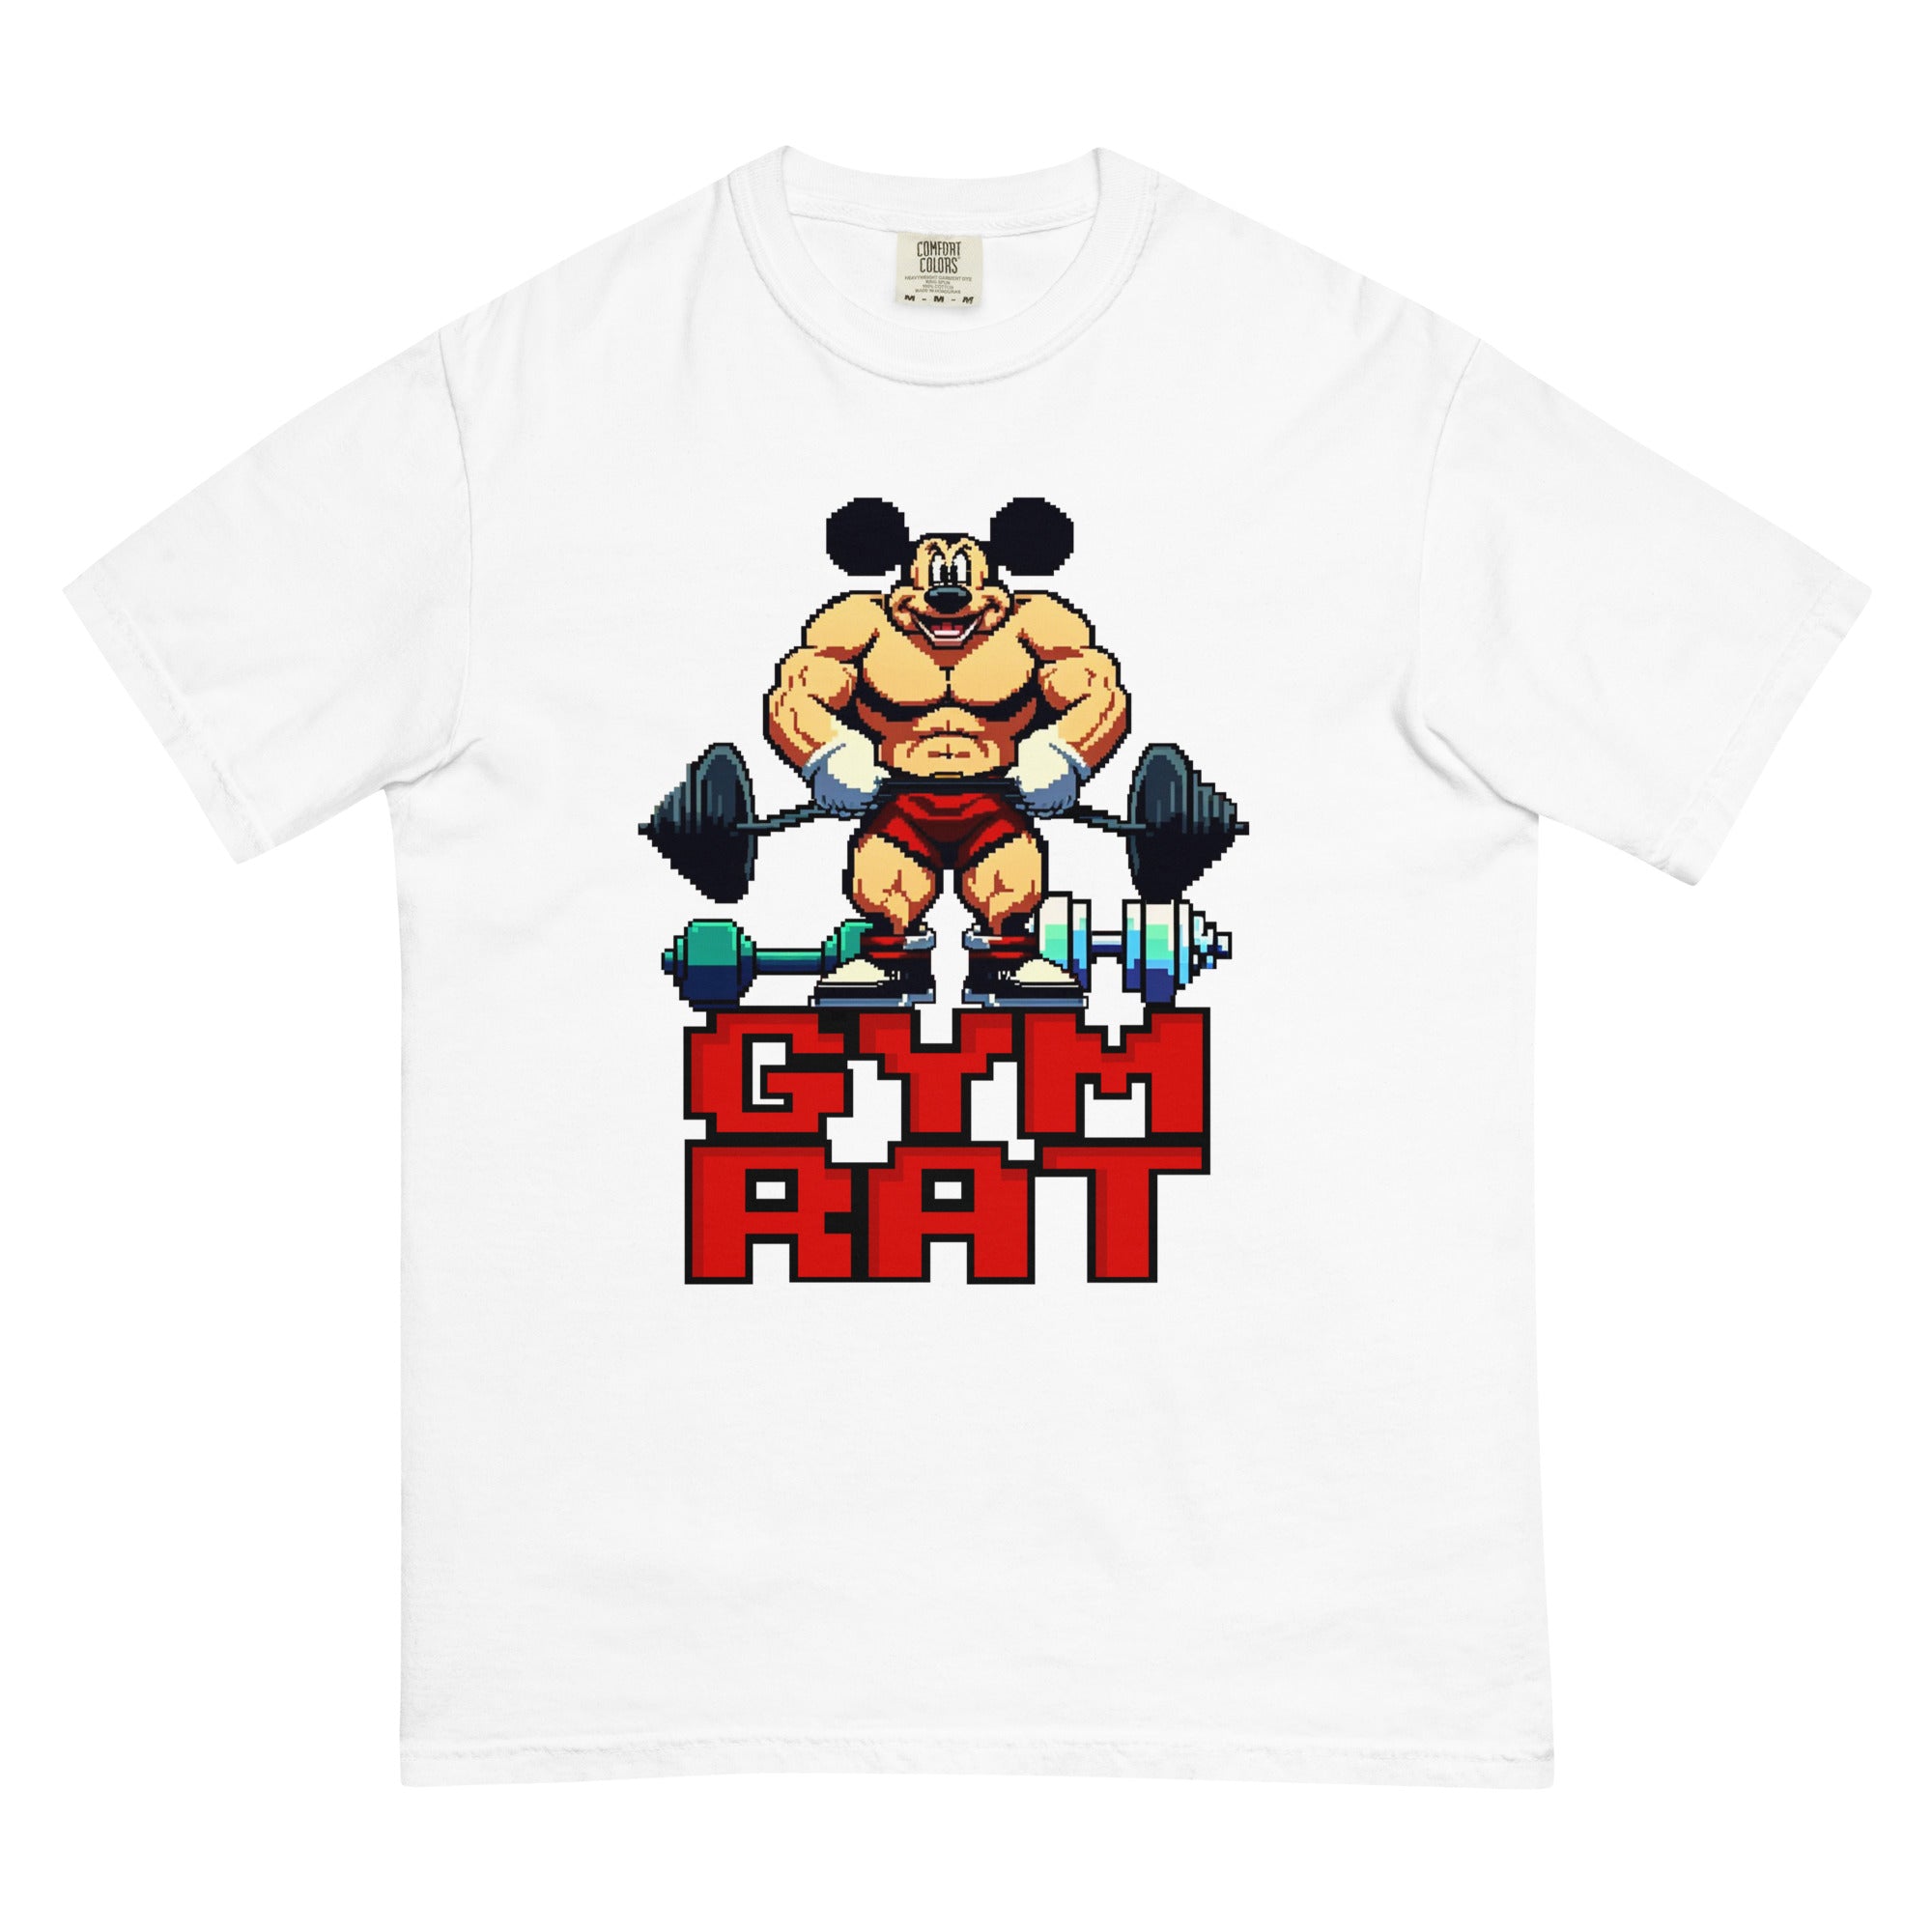 LookHUMAN I'm Not A Gym Rat, I'm A Gym Raptor White Mens/Unisex Cotton T-Shirt - Size Medium